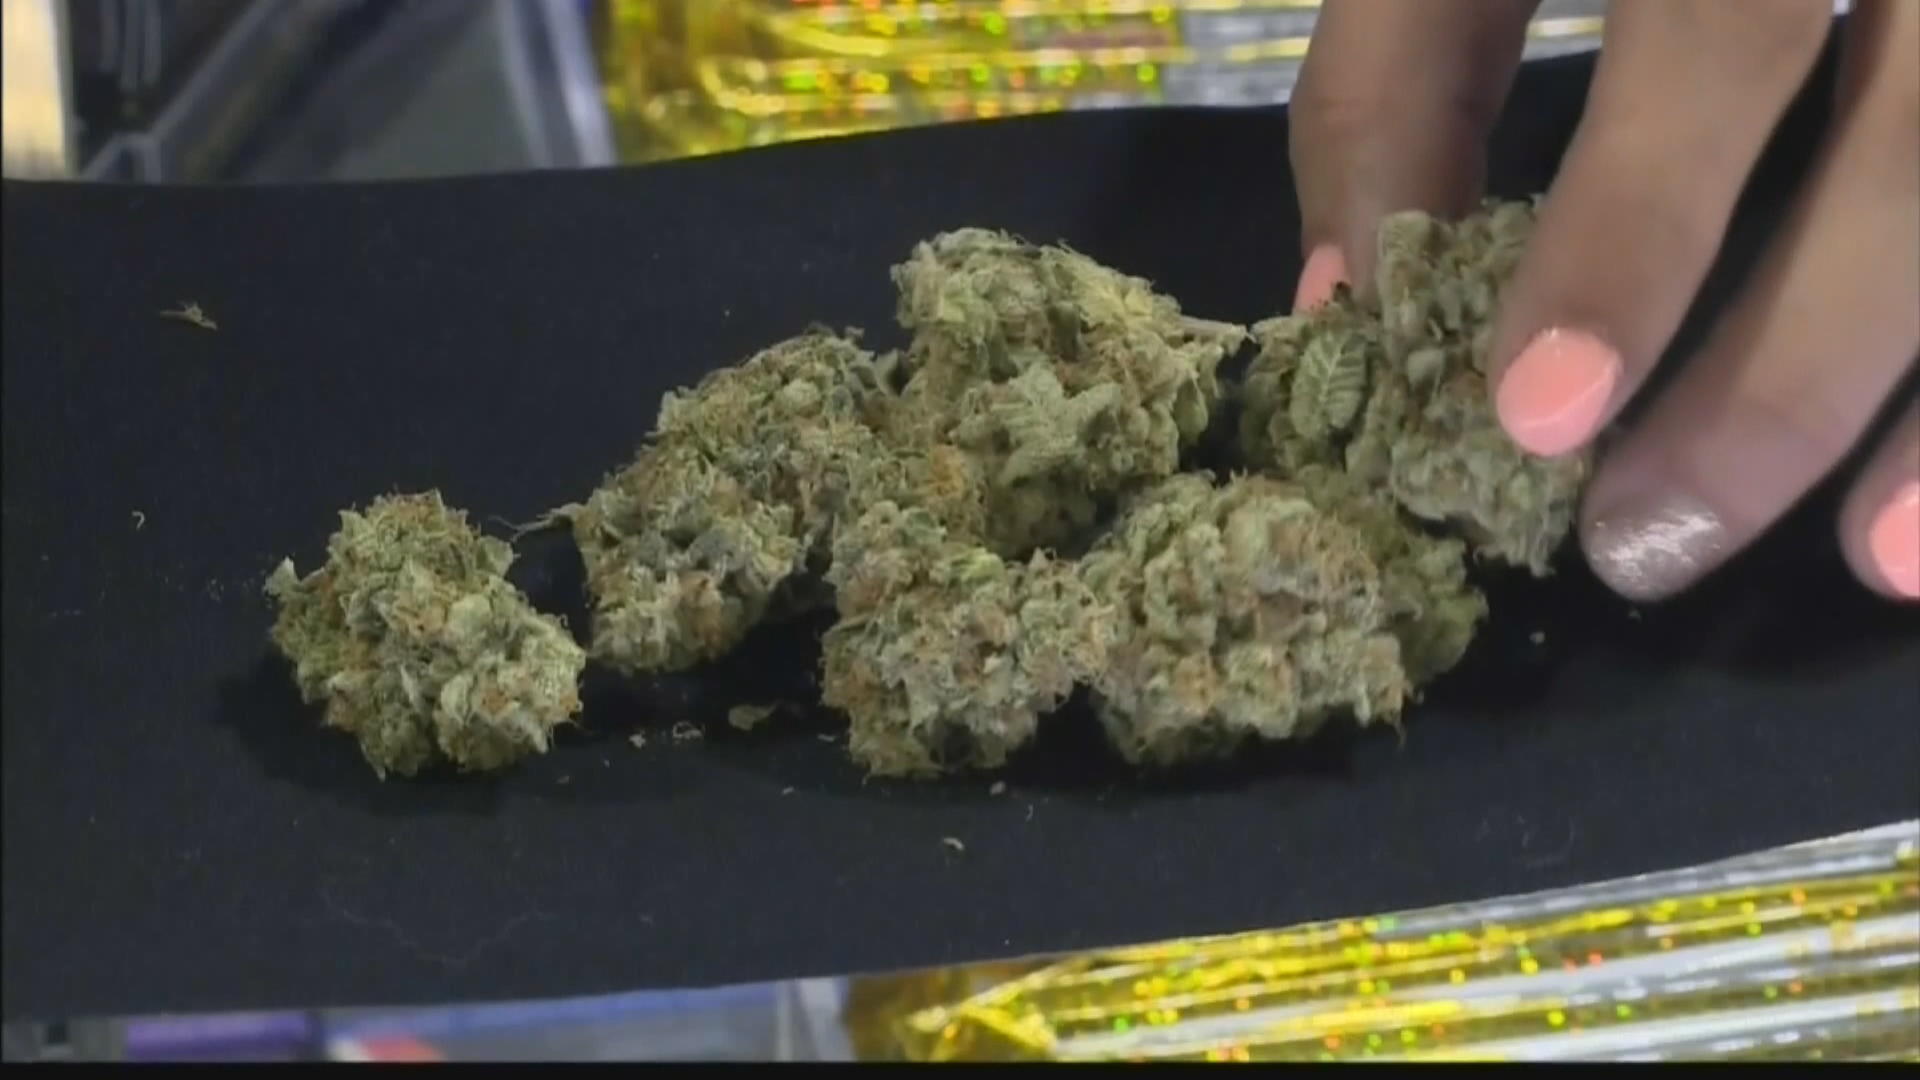 Legal marijuana: Michigan becomes first state in Midwest to allow  recreational marijuana - CBS News